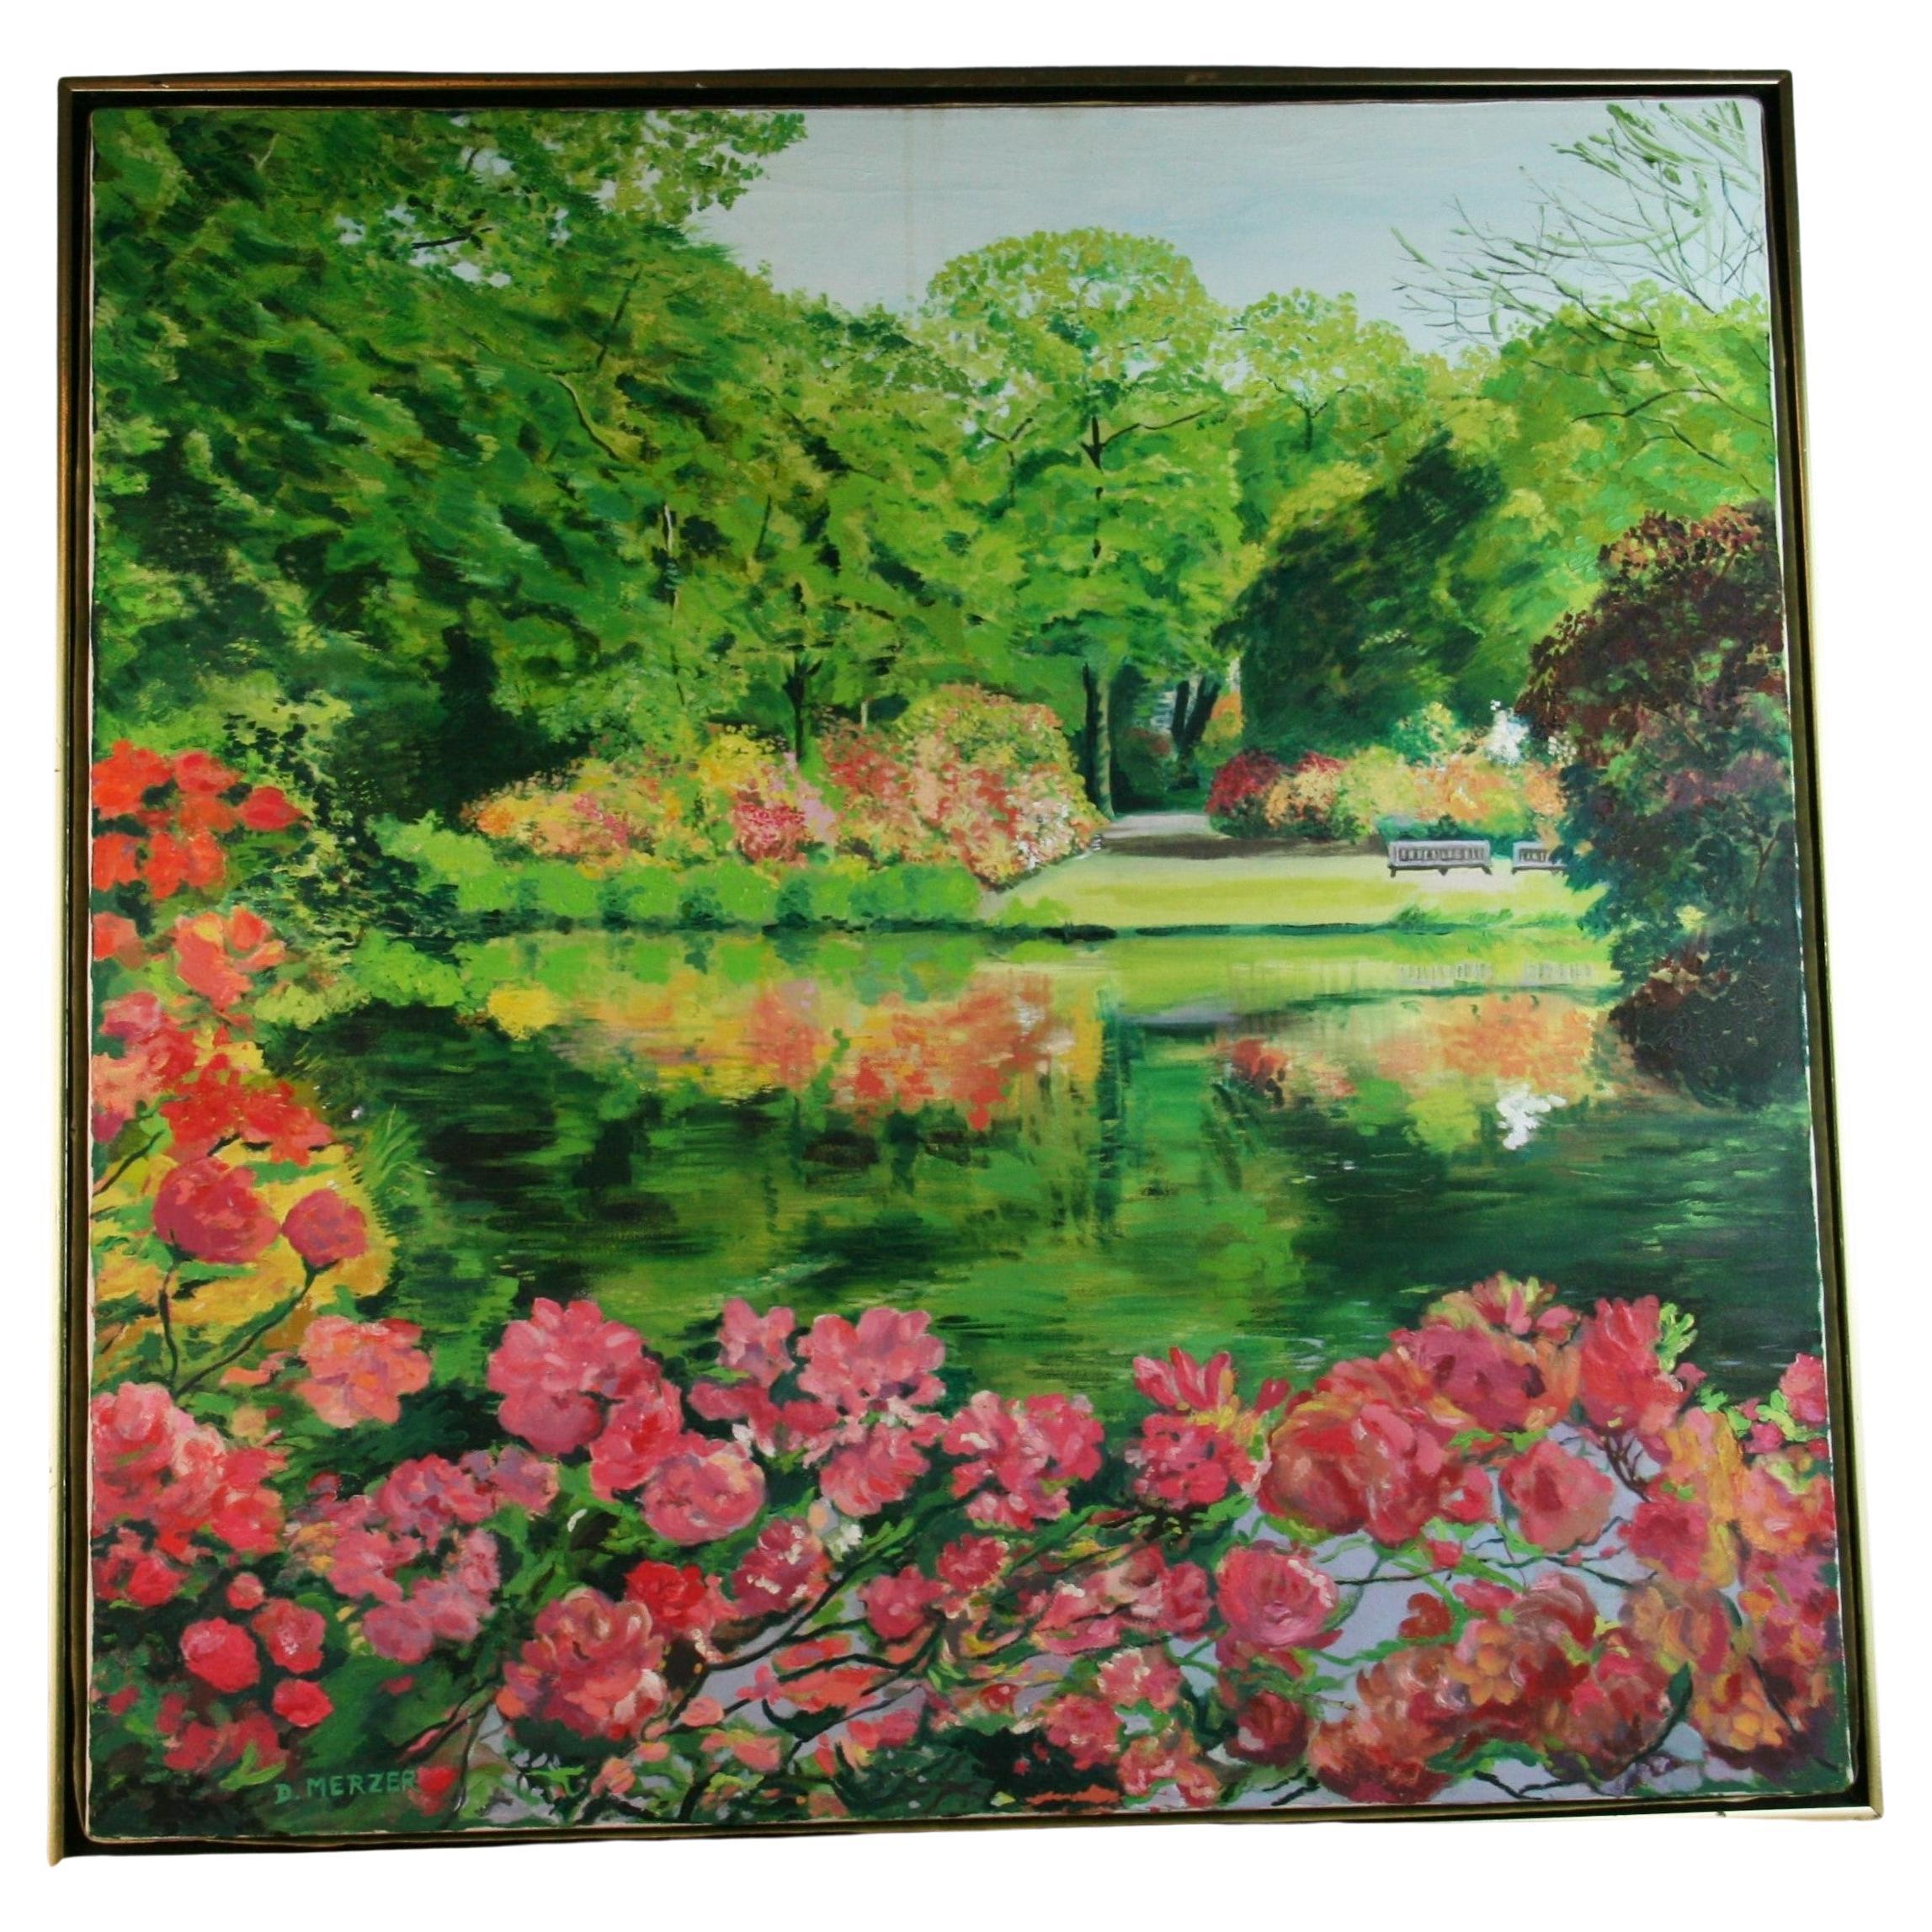 Grand paysage de jardin à fleurs impressionniste moderne, D.Merzer, 1984 en vente